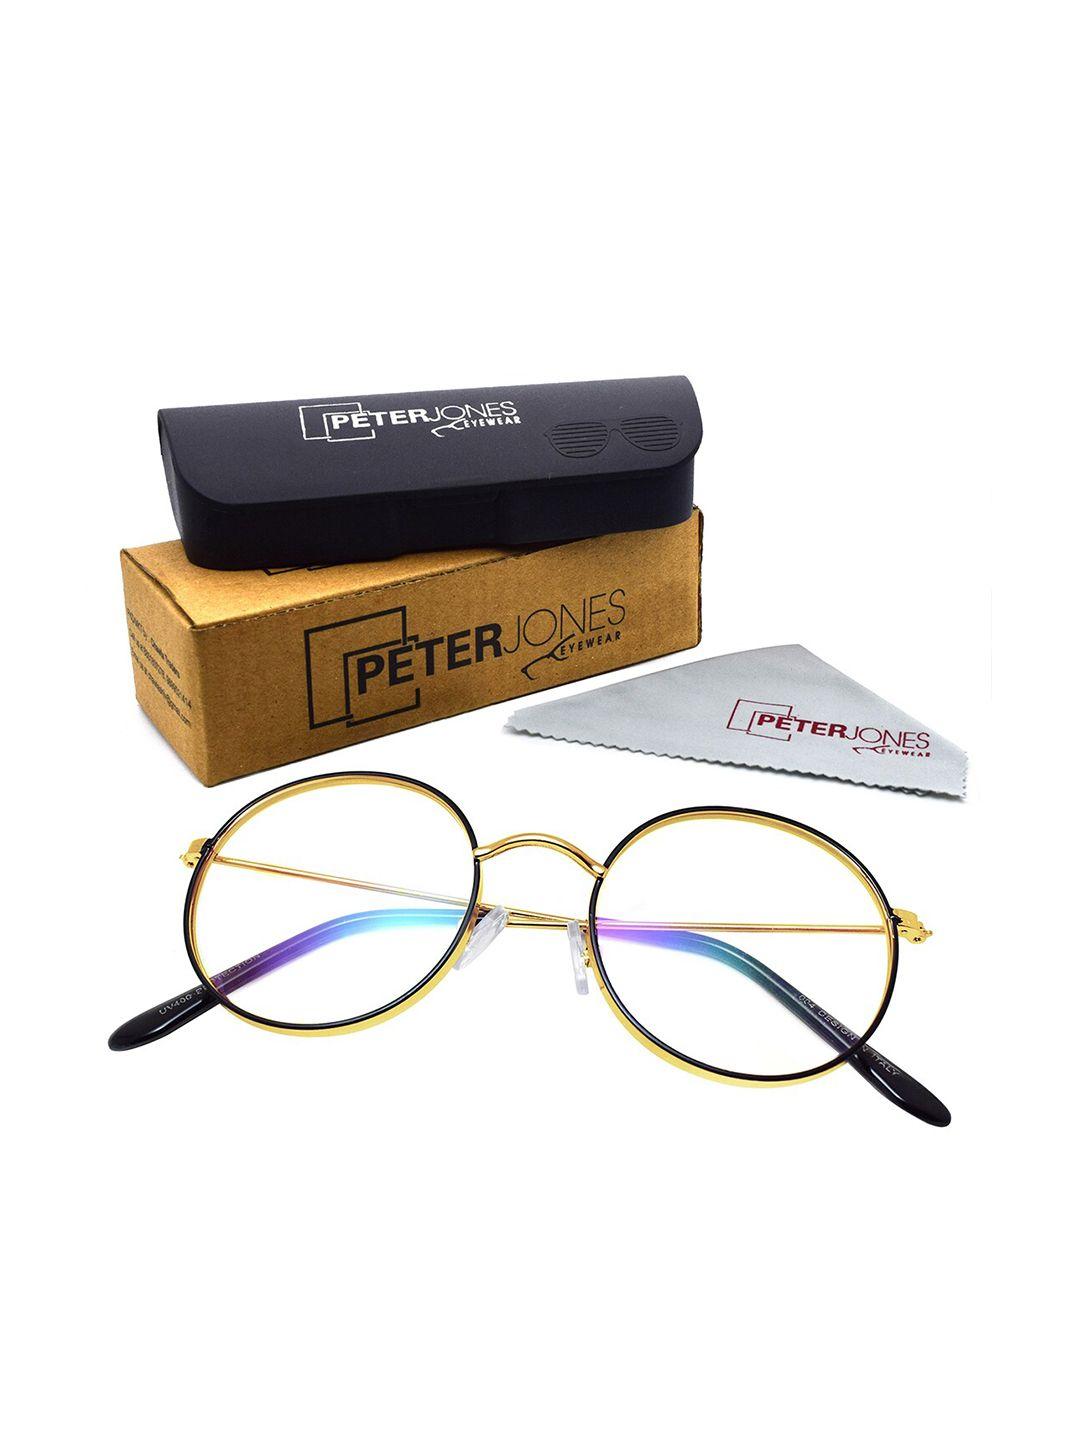 peter jones eyewear unisex black & gold-toned full rim round frames with anti glare lenses